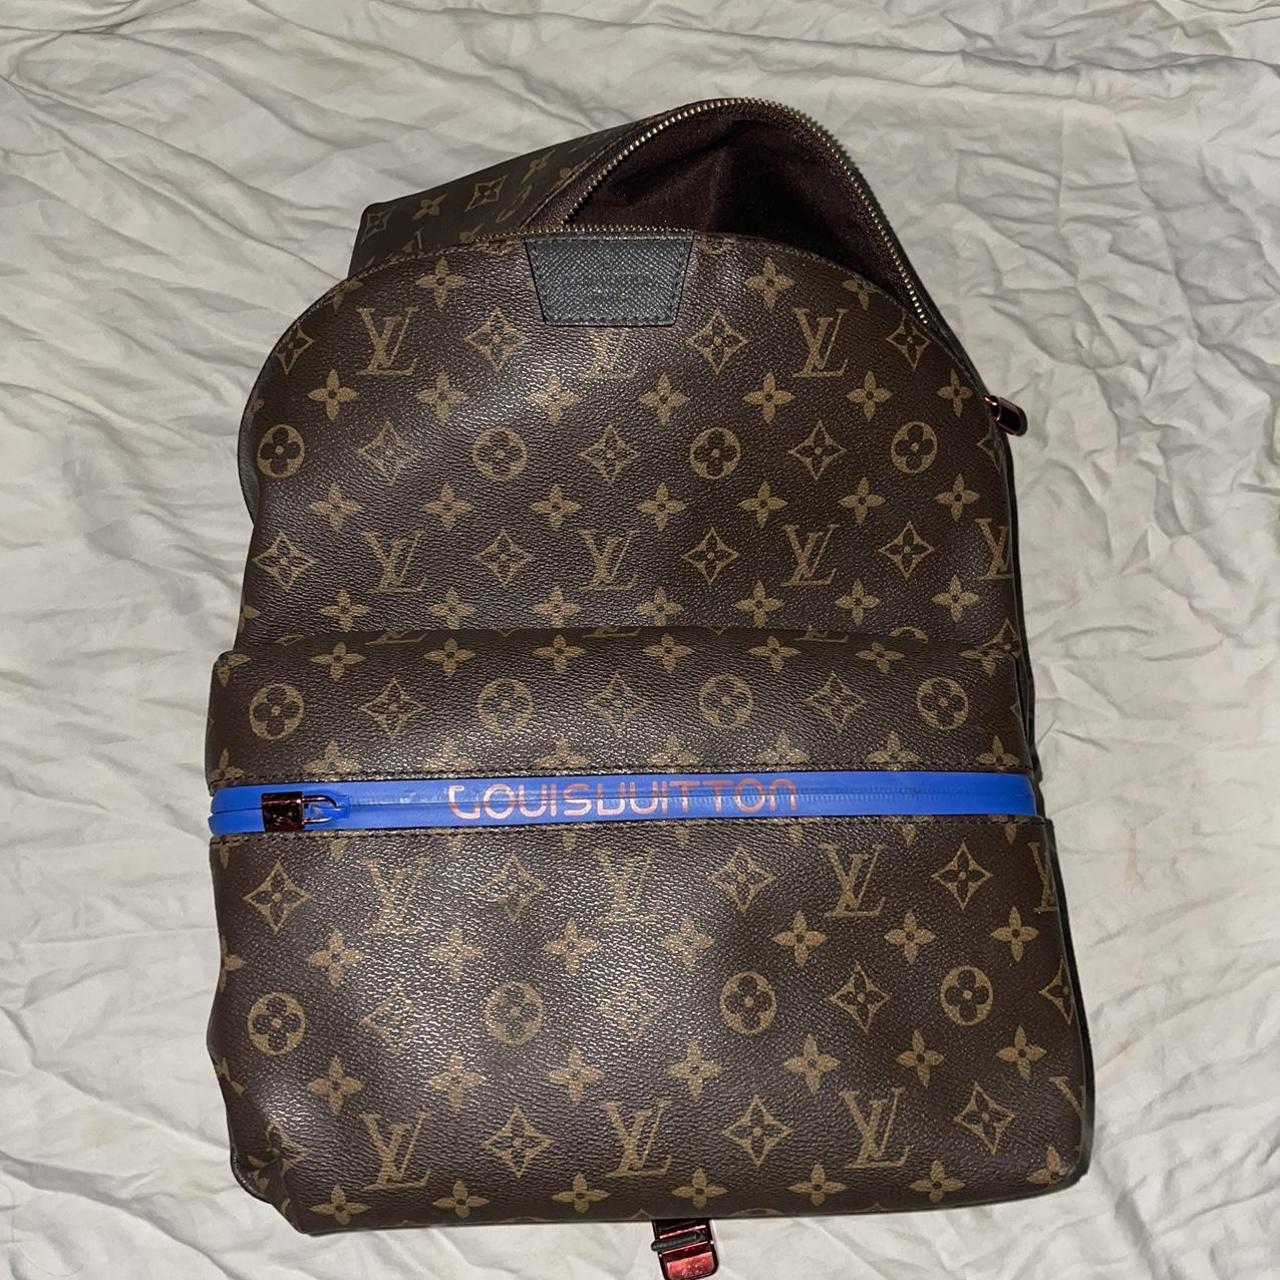 Louis Vuitton, Bags, Like Newauthentic Louis Vuitton Back Pack